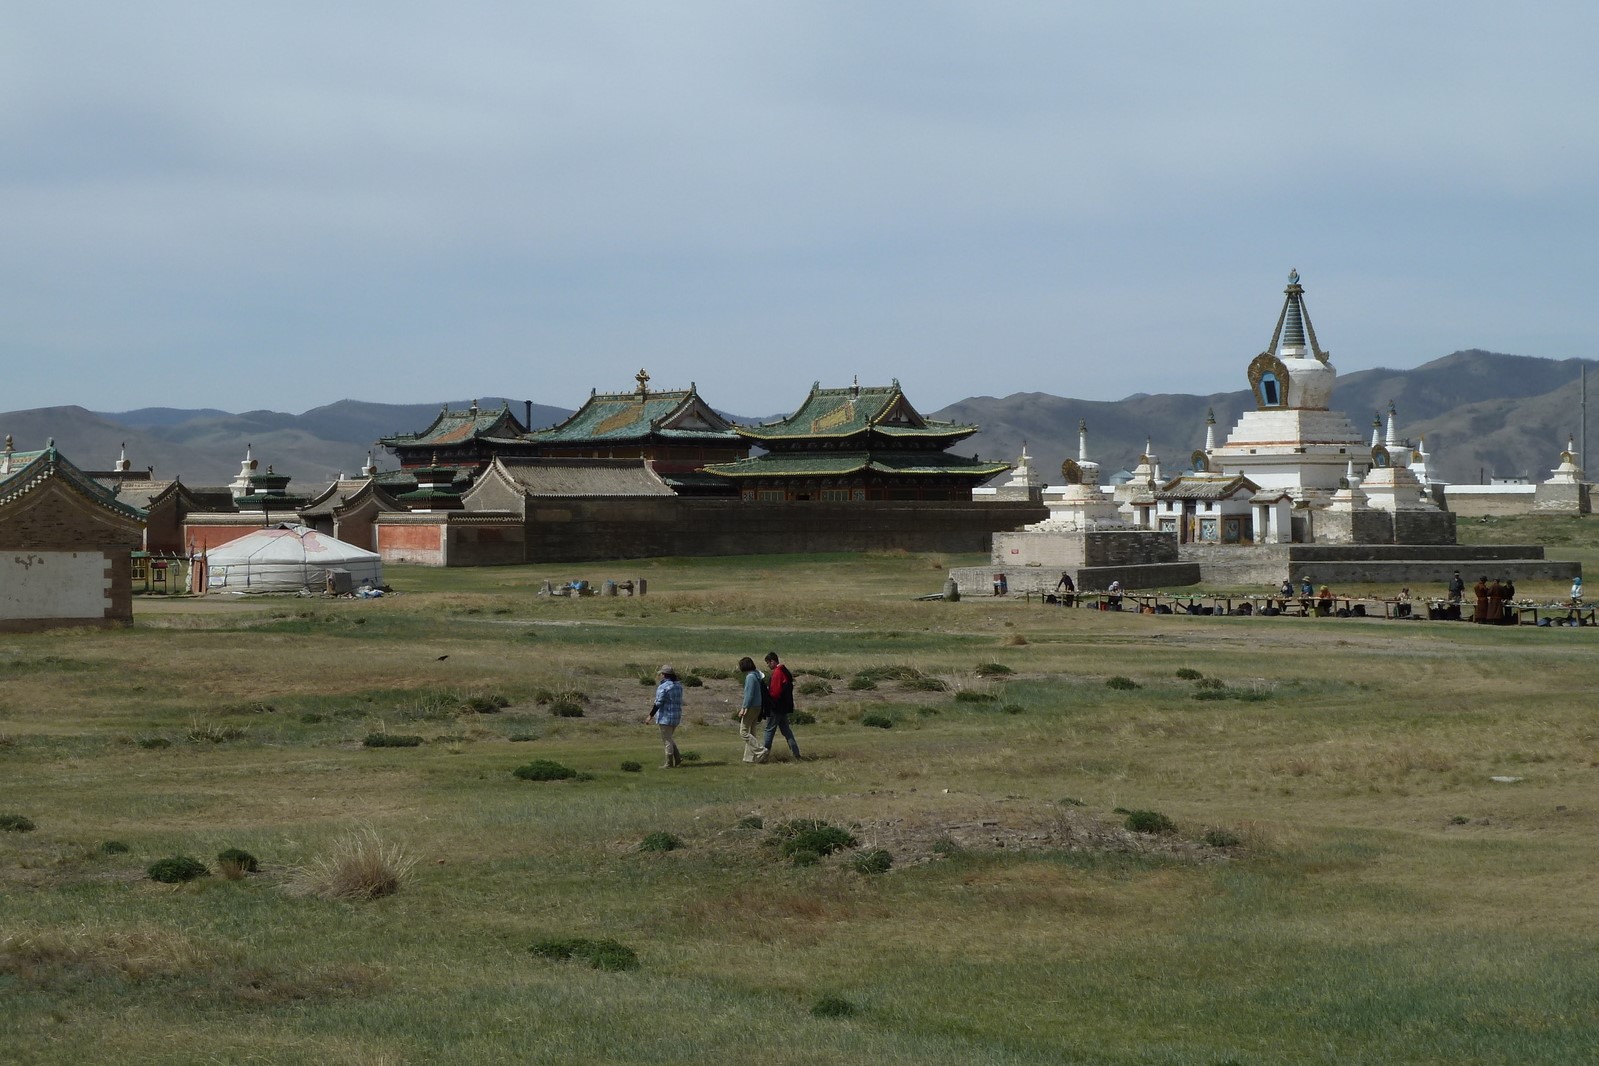 Karakorum, Mongolia